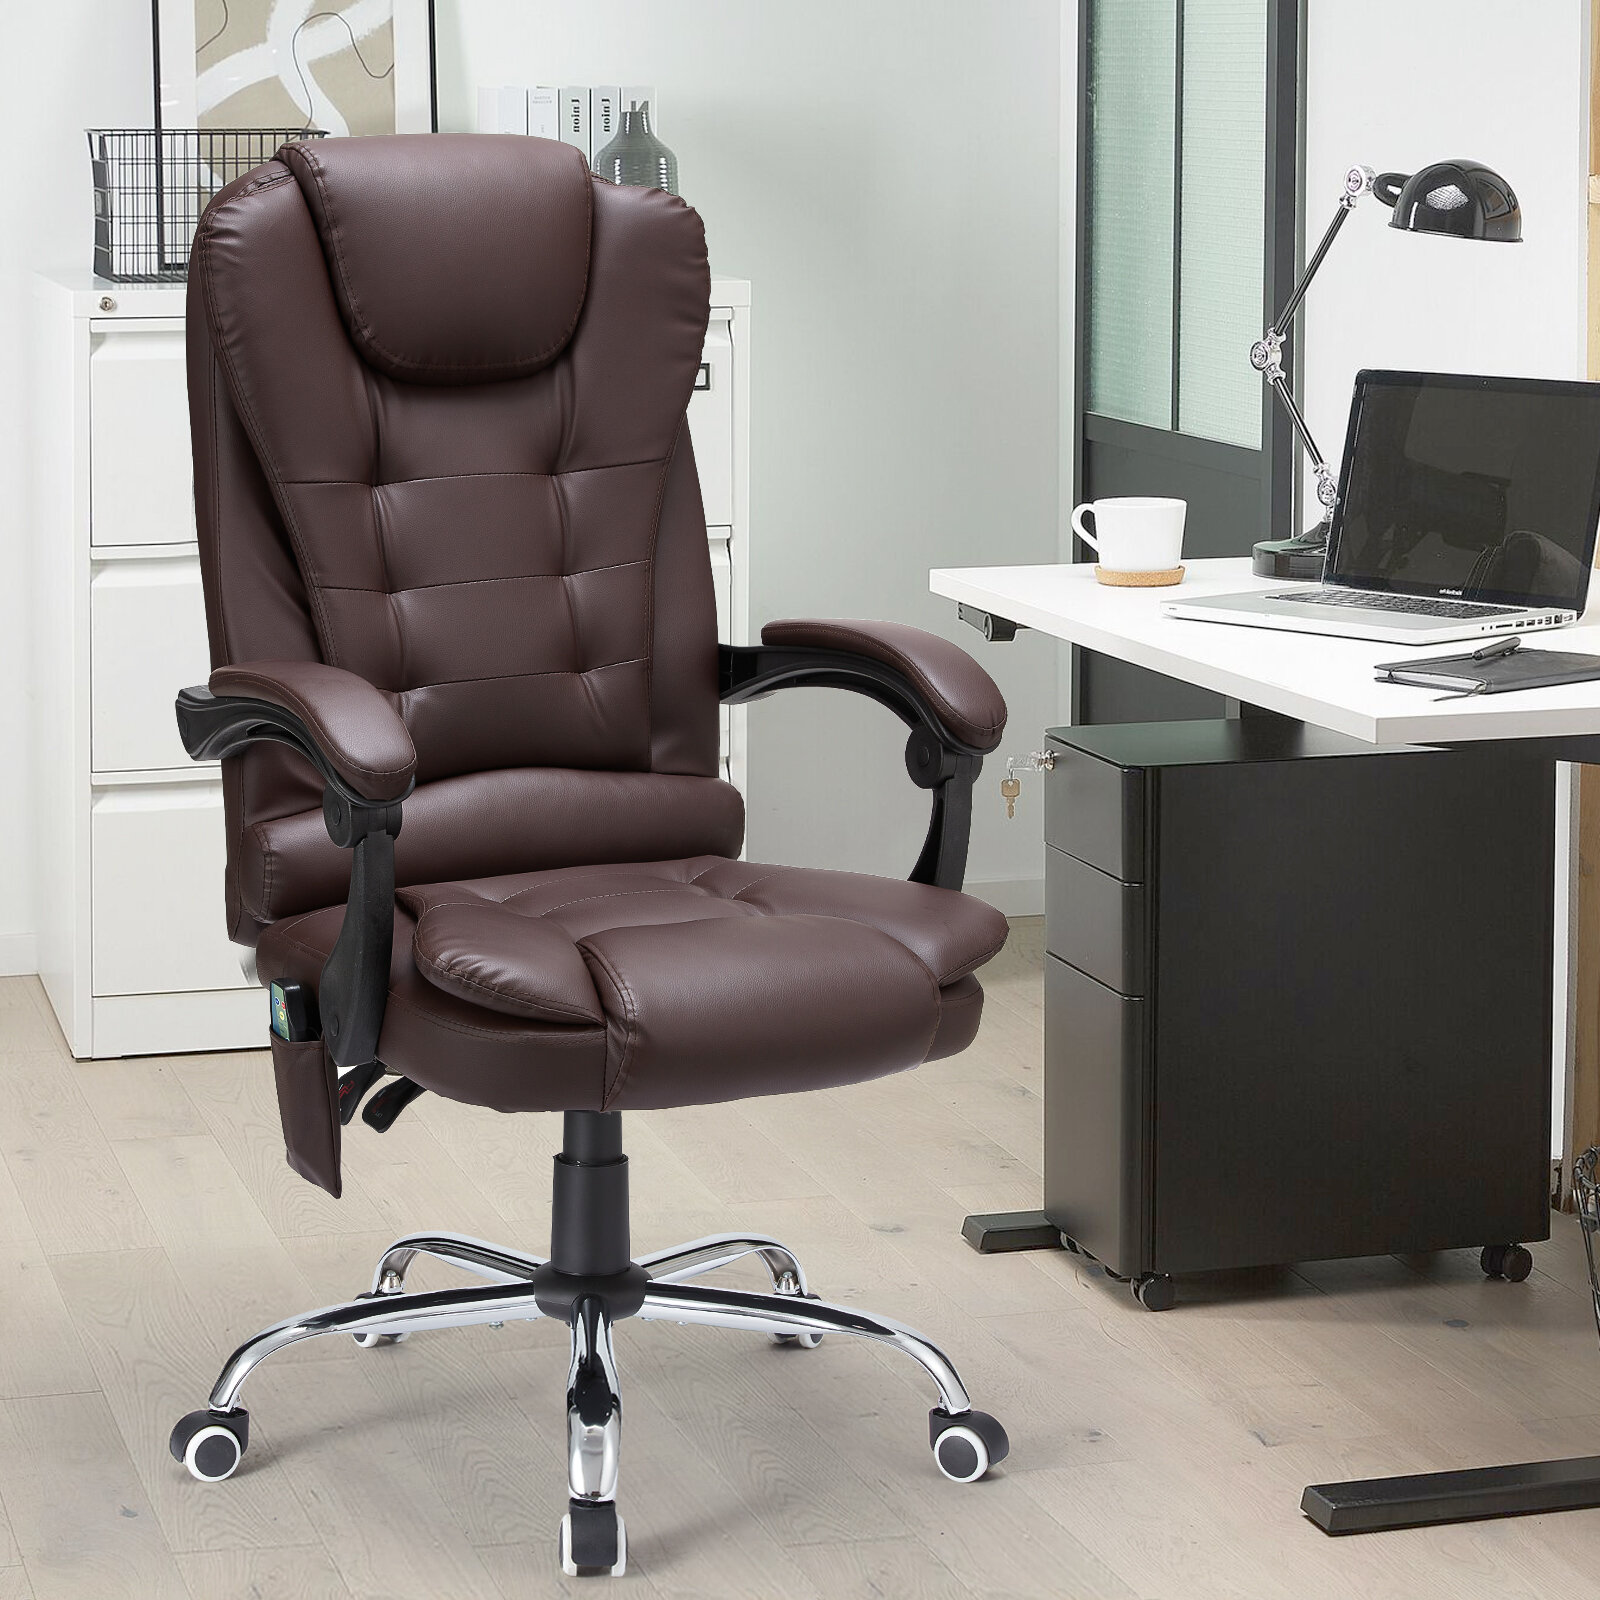 executive style office chair Ergonomic 